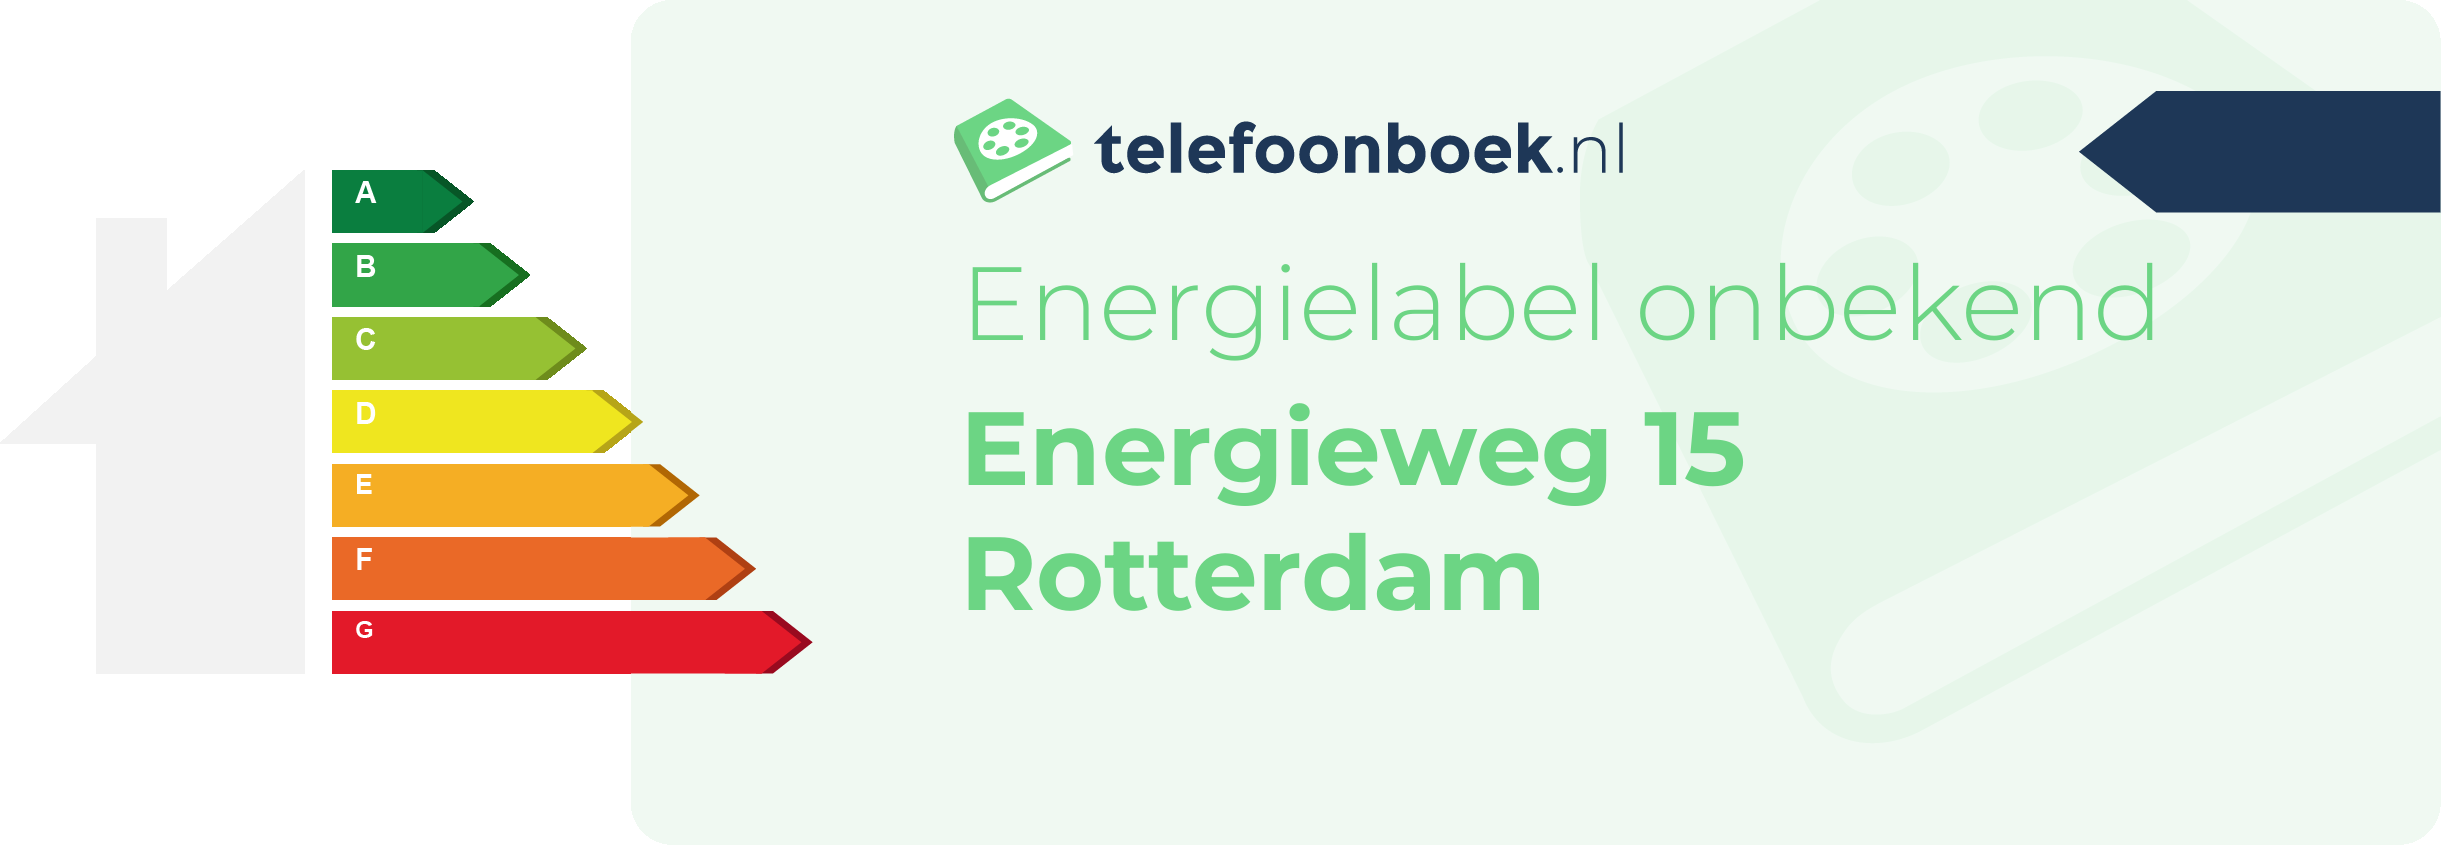 Energielabel Energieweg 15 Rotterdam